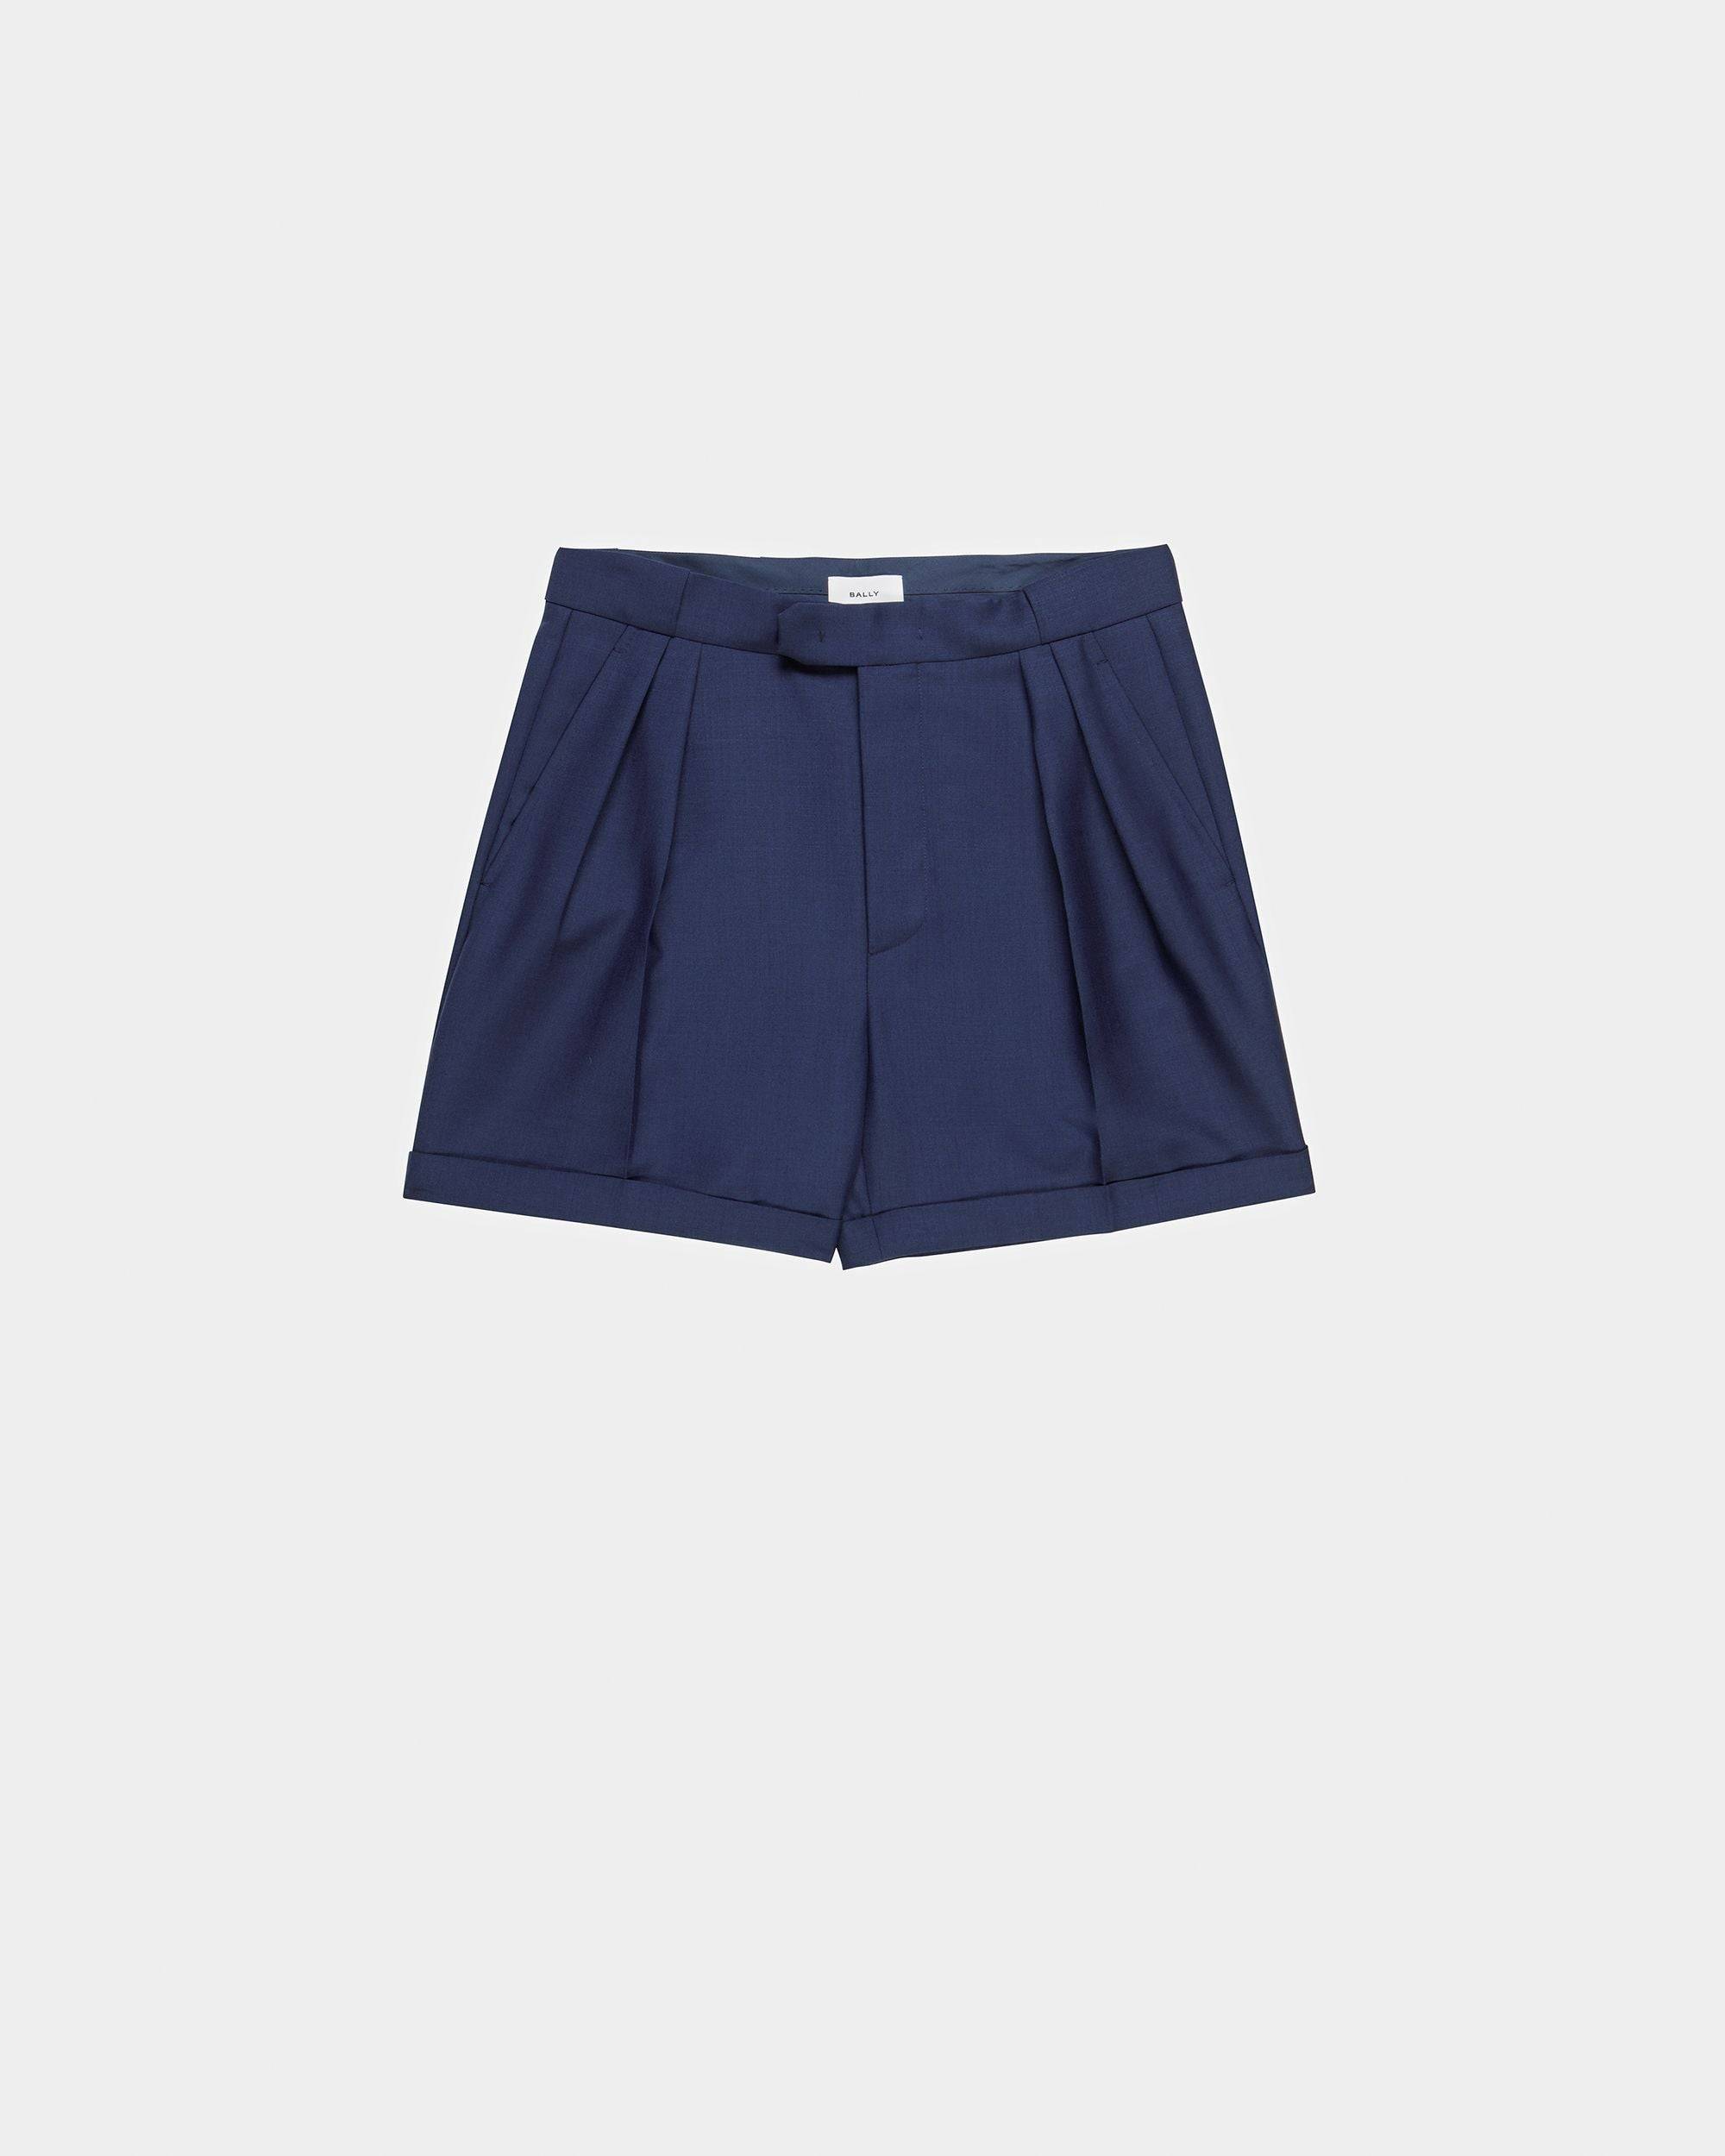 Bermuda-Shorts Aen Marineblauer Wolle - Bally - 06